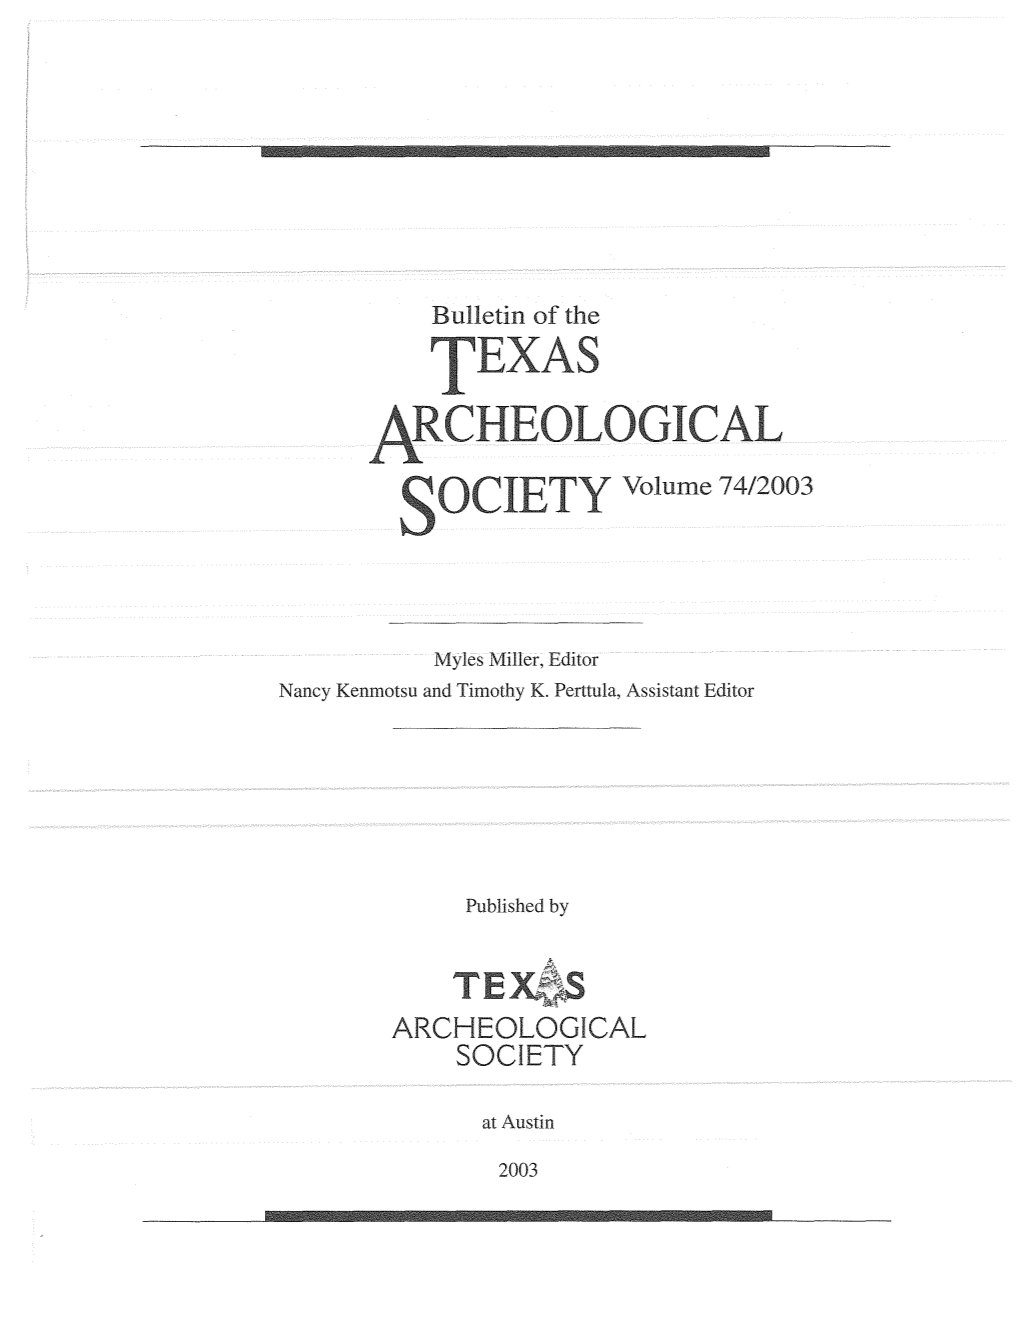 RCHEOLOGICAL QCIETY Volume 74/2003